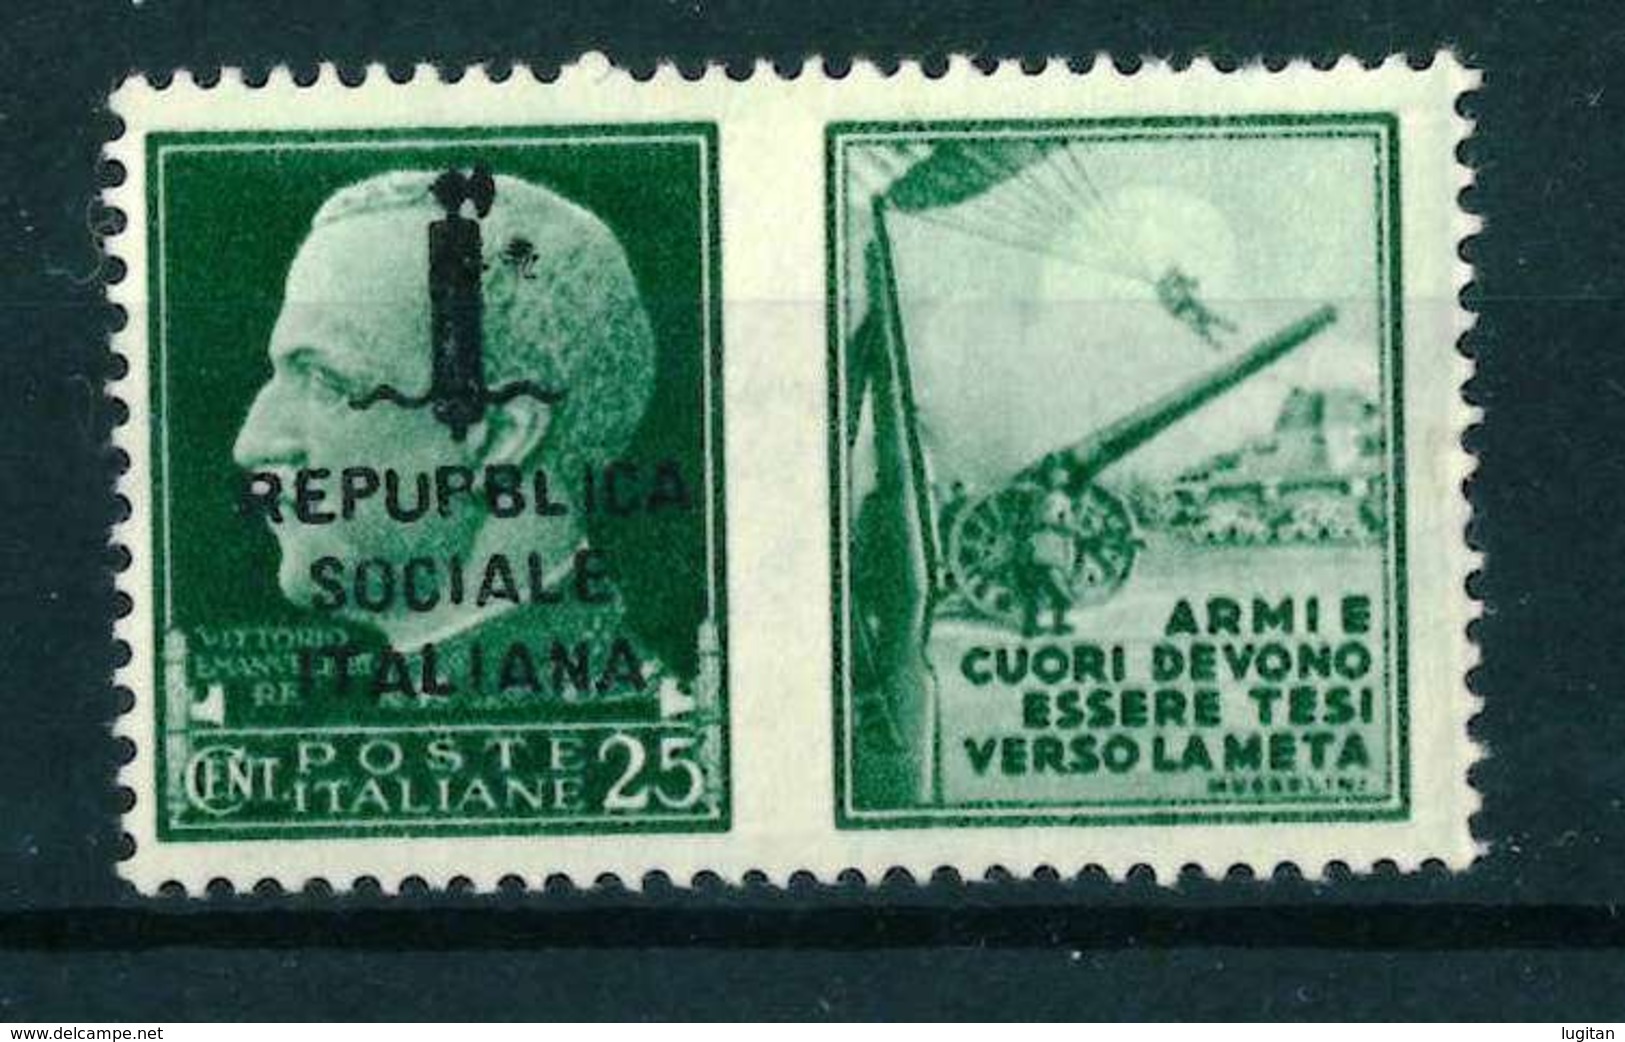 VARIETA' - REPUBPLICA ITALIANA SASS. 26 H - NUOVO MNH**  - PROPAGANDA DI GUERRA - Propaganda Di Guerra